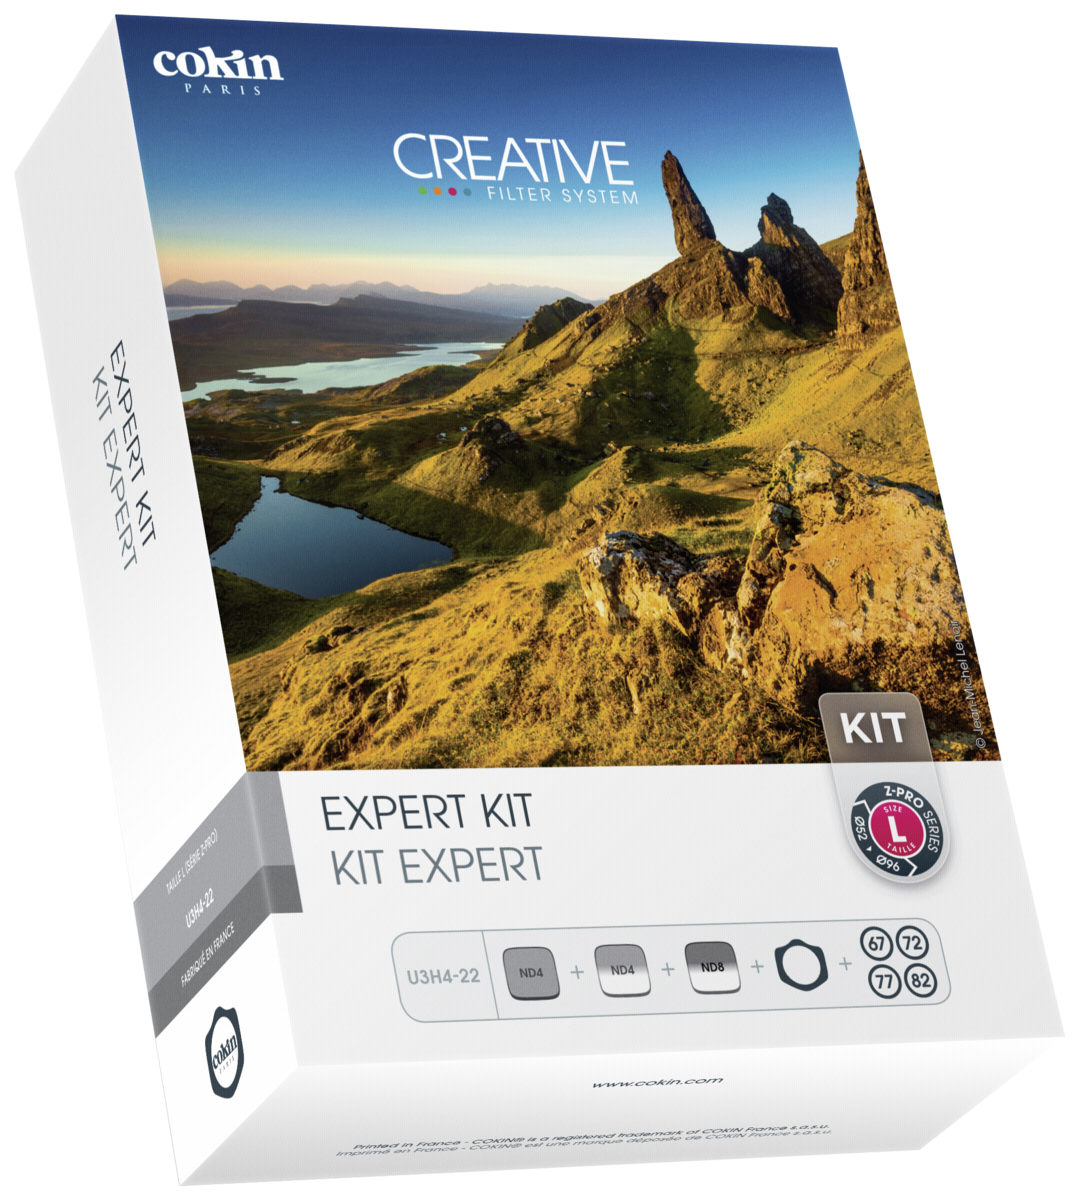 Cokin creative expert kit u3h4